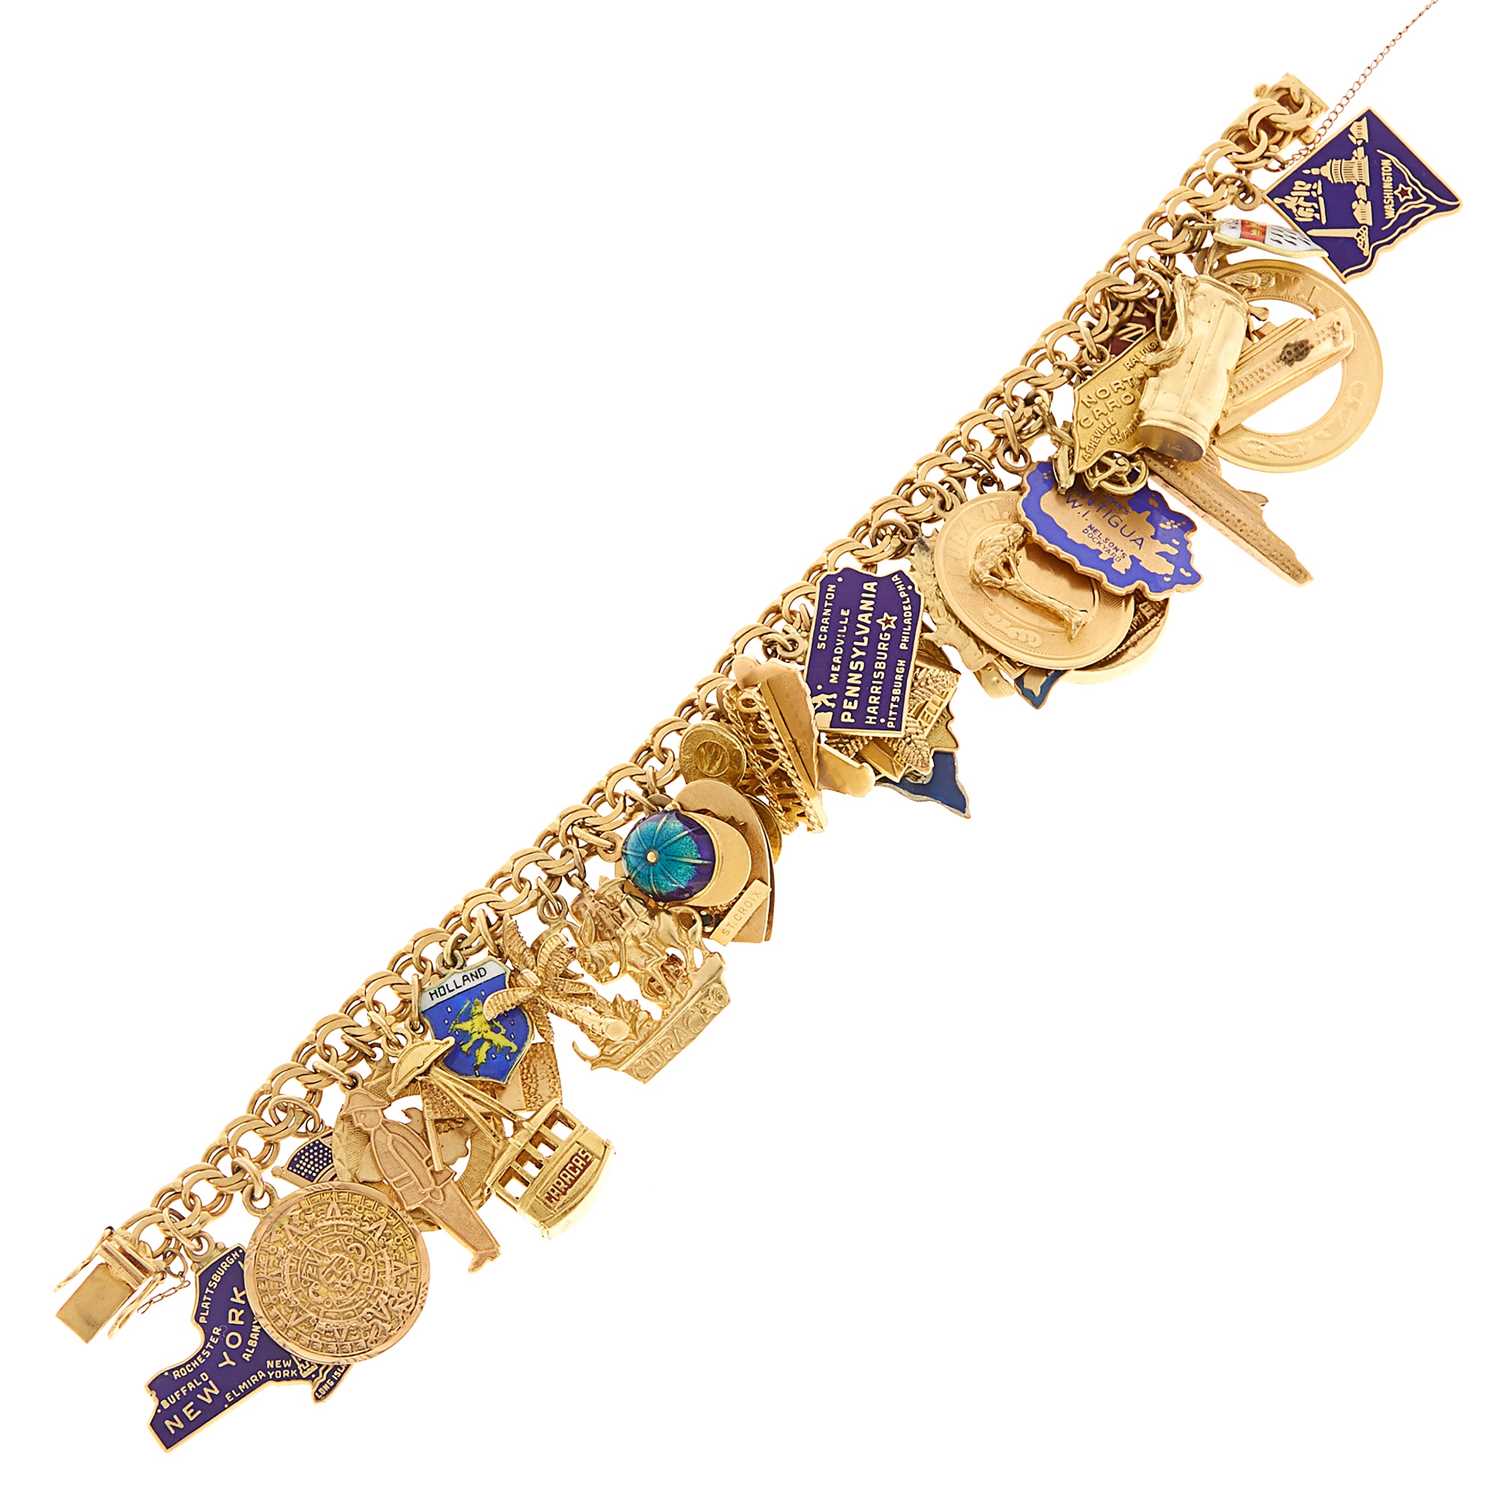 Lot 1274 - Gold and Enamel Travel Charm Bracelet